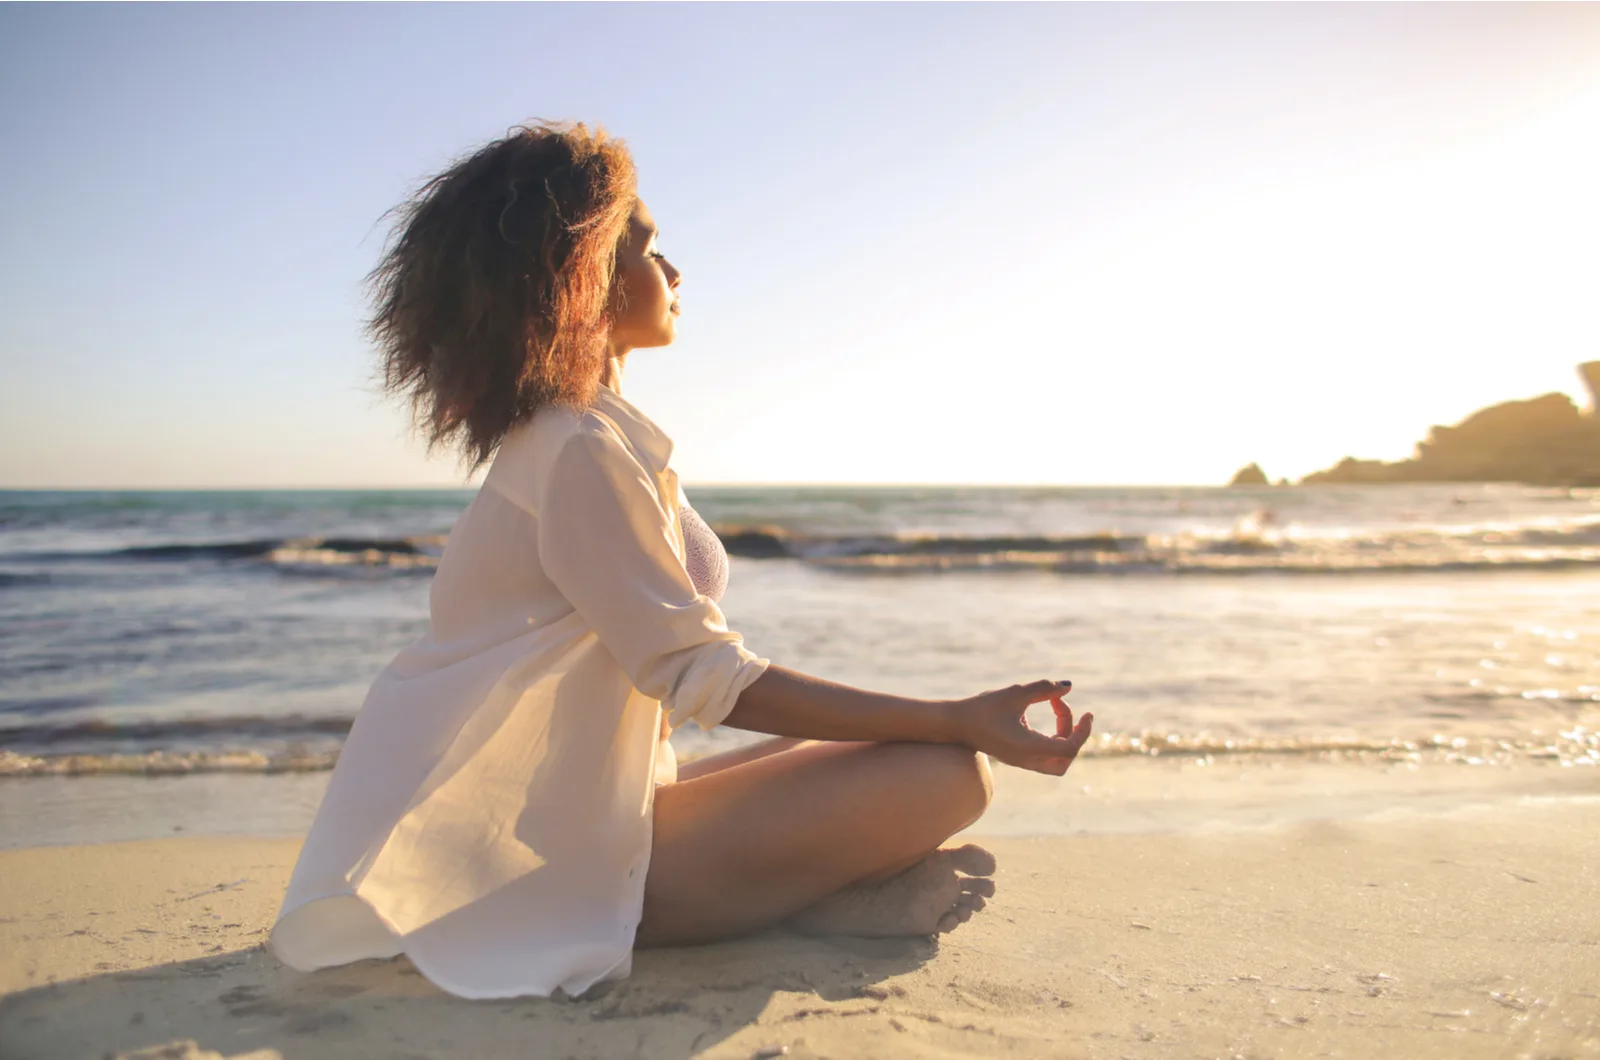 woman meditating on beach in sunset